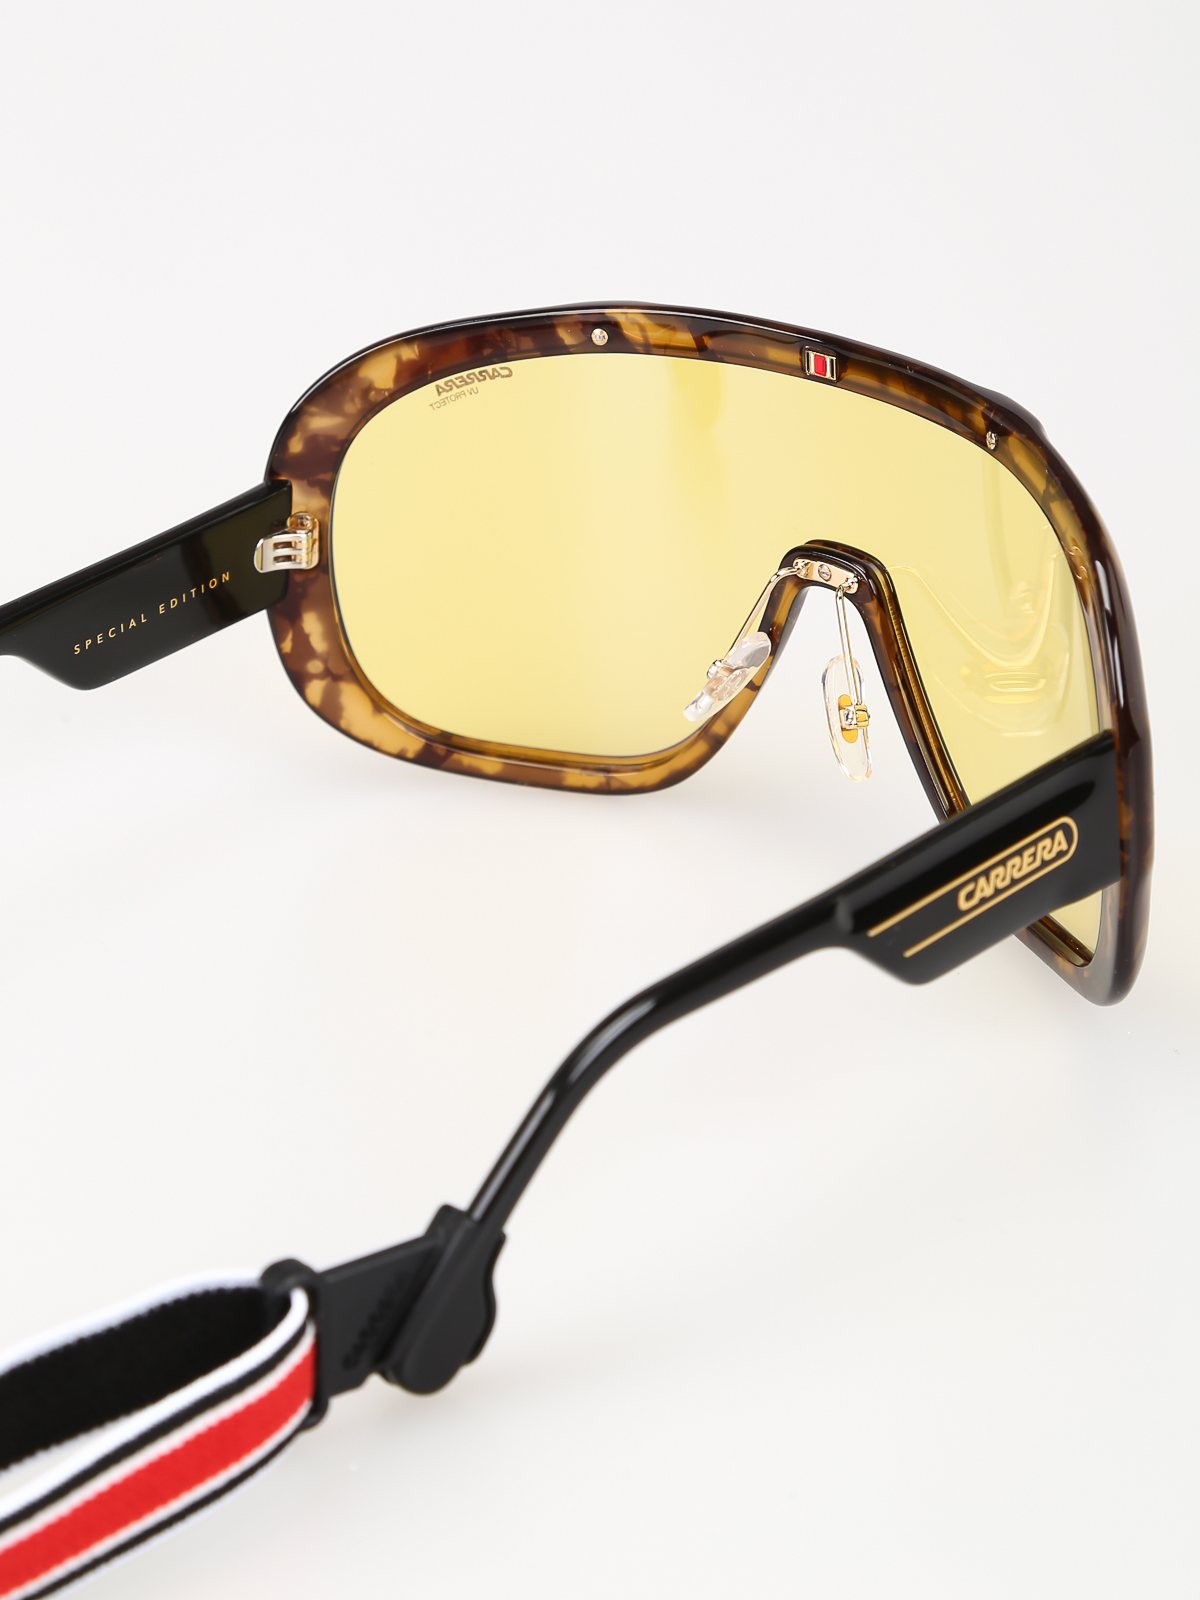 Sunglasses Carrera - Carrera Epica Special Edition sunglasses -  CARRERAEPICASCLCU